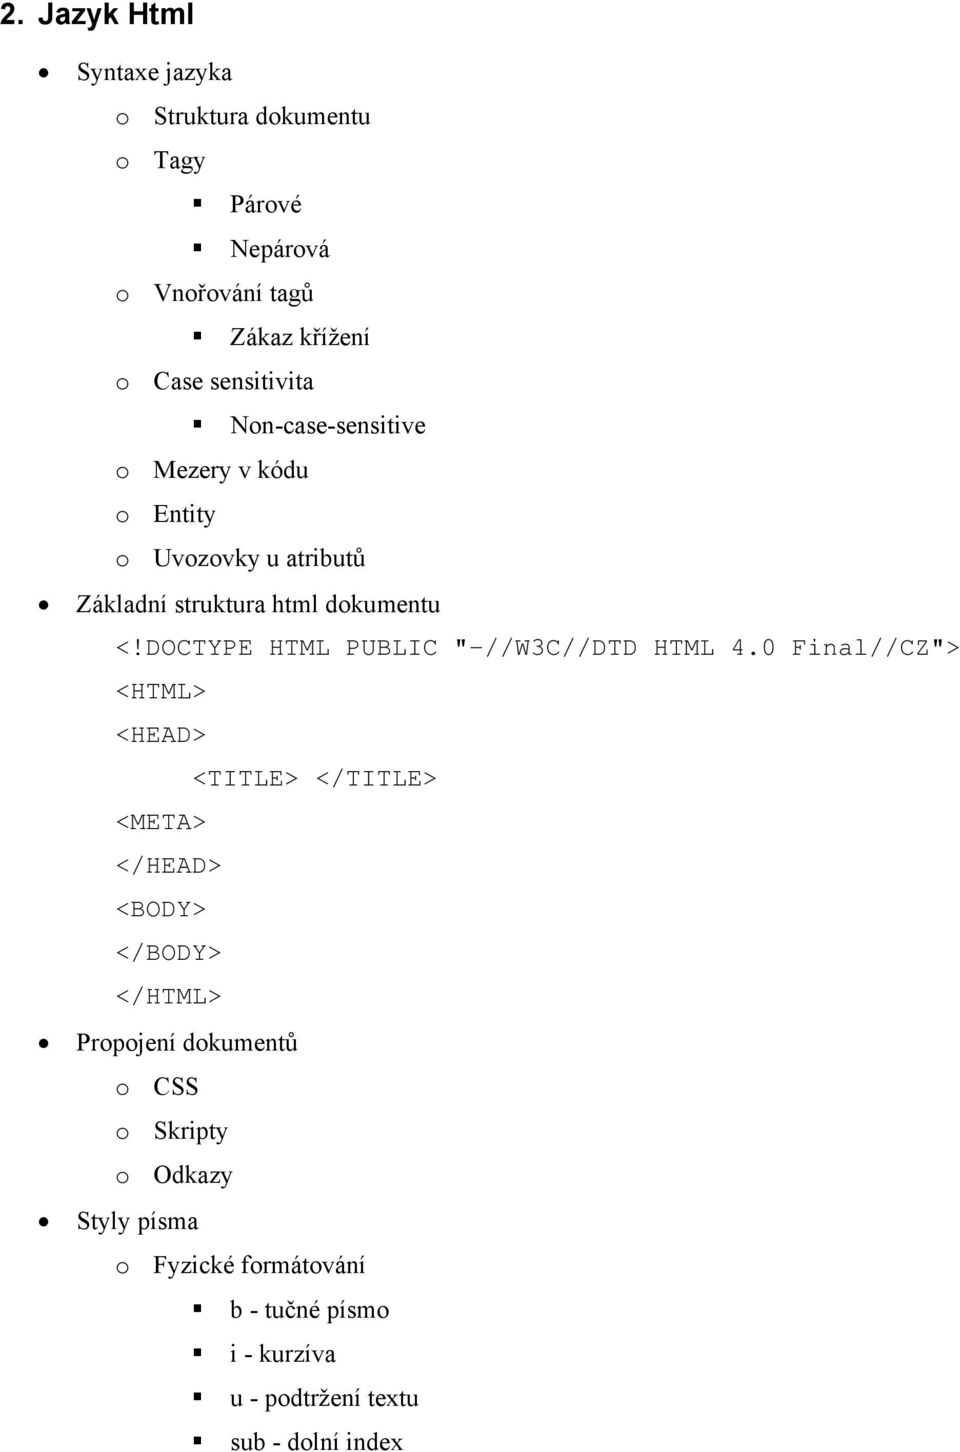 DOCTYPE HTML PUBLIC "-//W3C//DTD HTML 4.